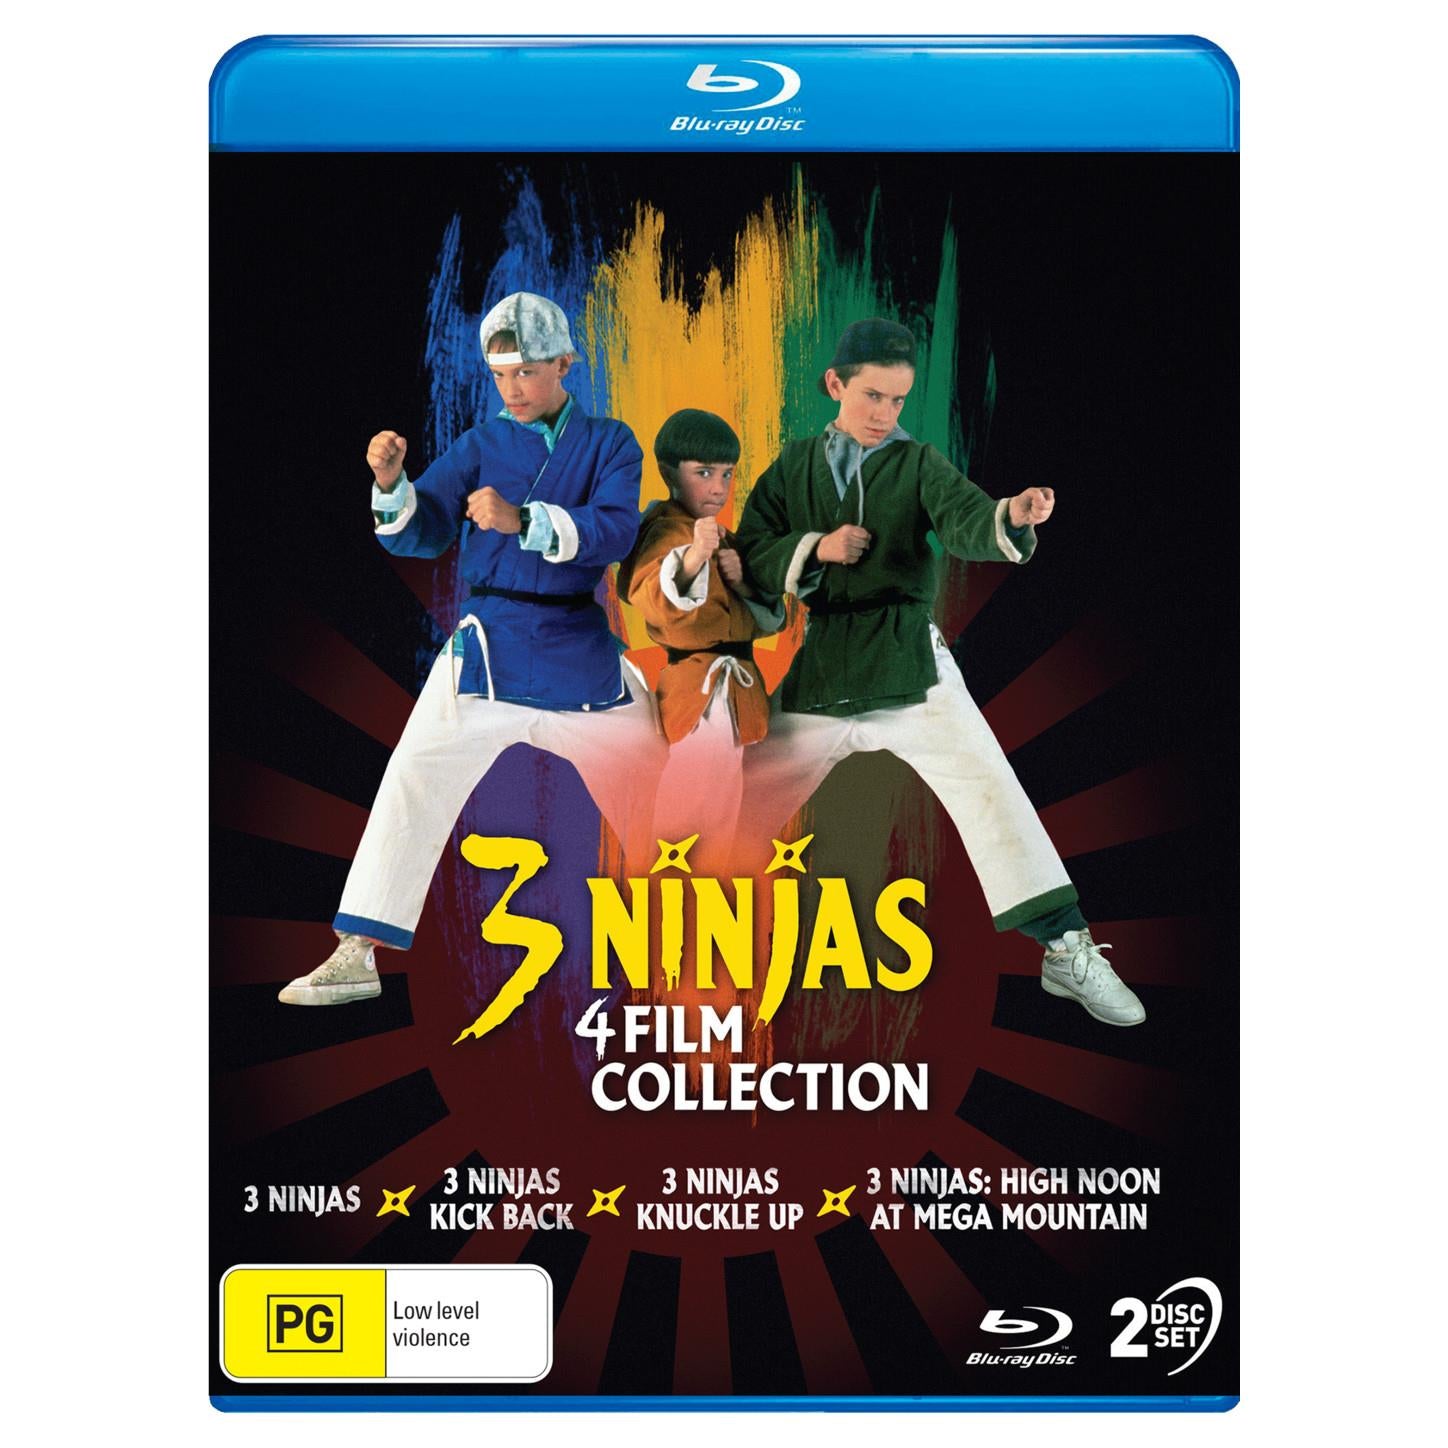 3 Ninjas / 3 Ninjas Kick Back / 3 Ninjas Knuckle Up / 3 Ninjas: High Noon  At Mega Mountain - JB Hi-Fi